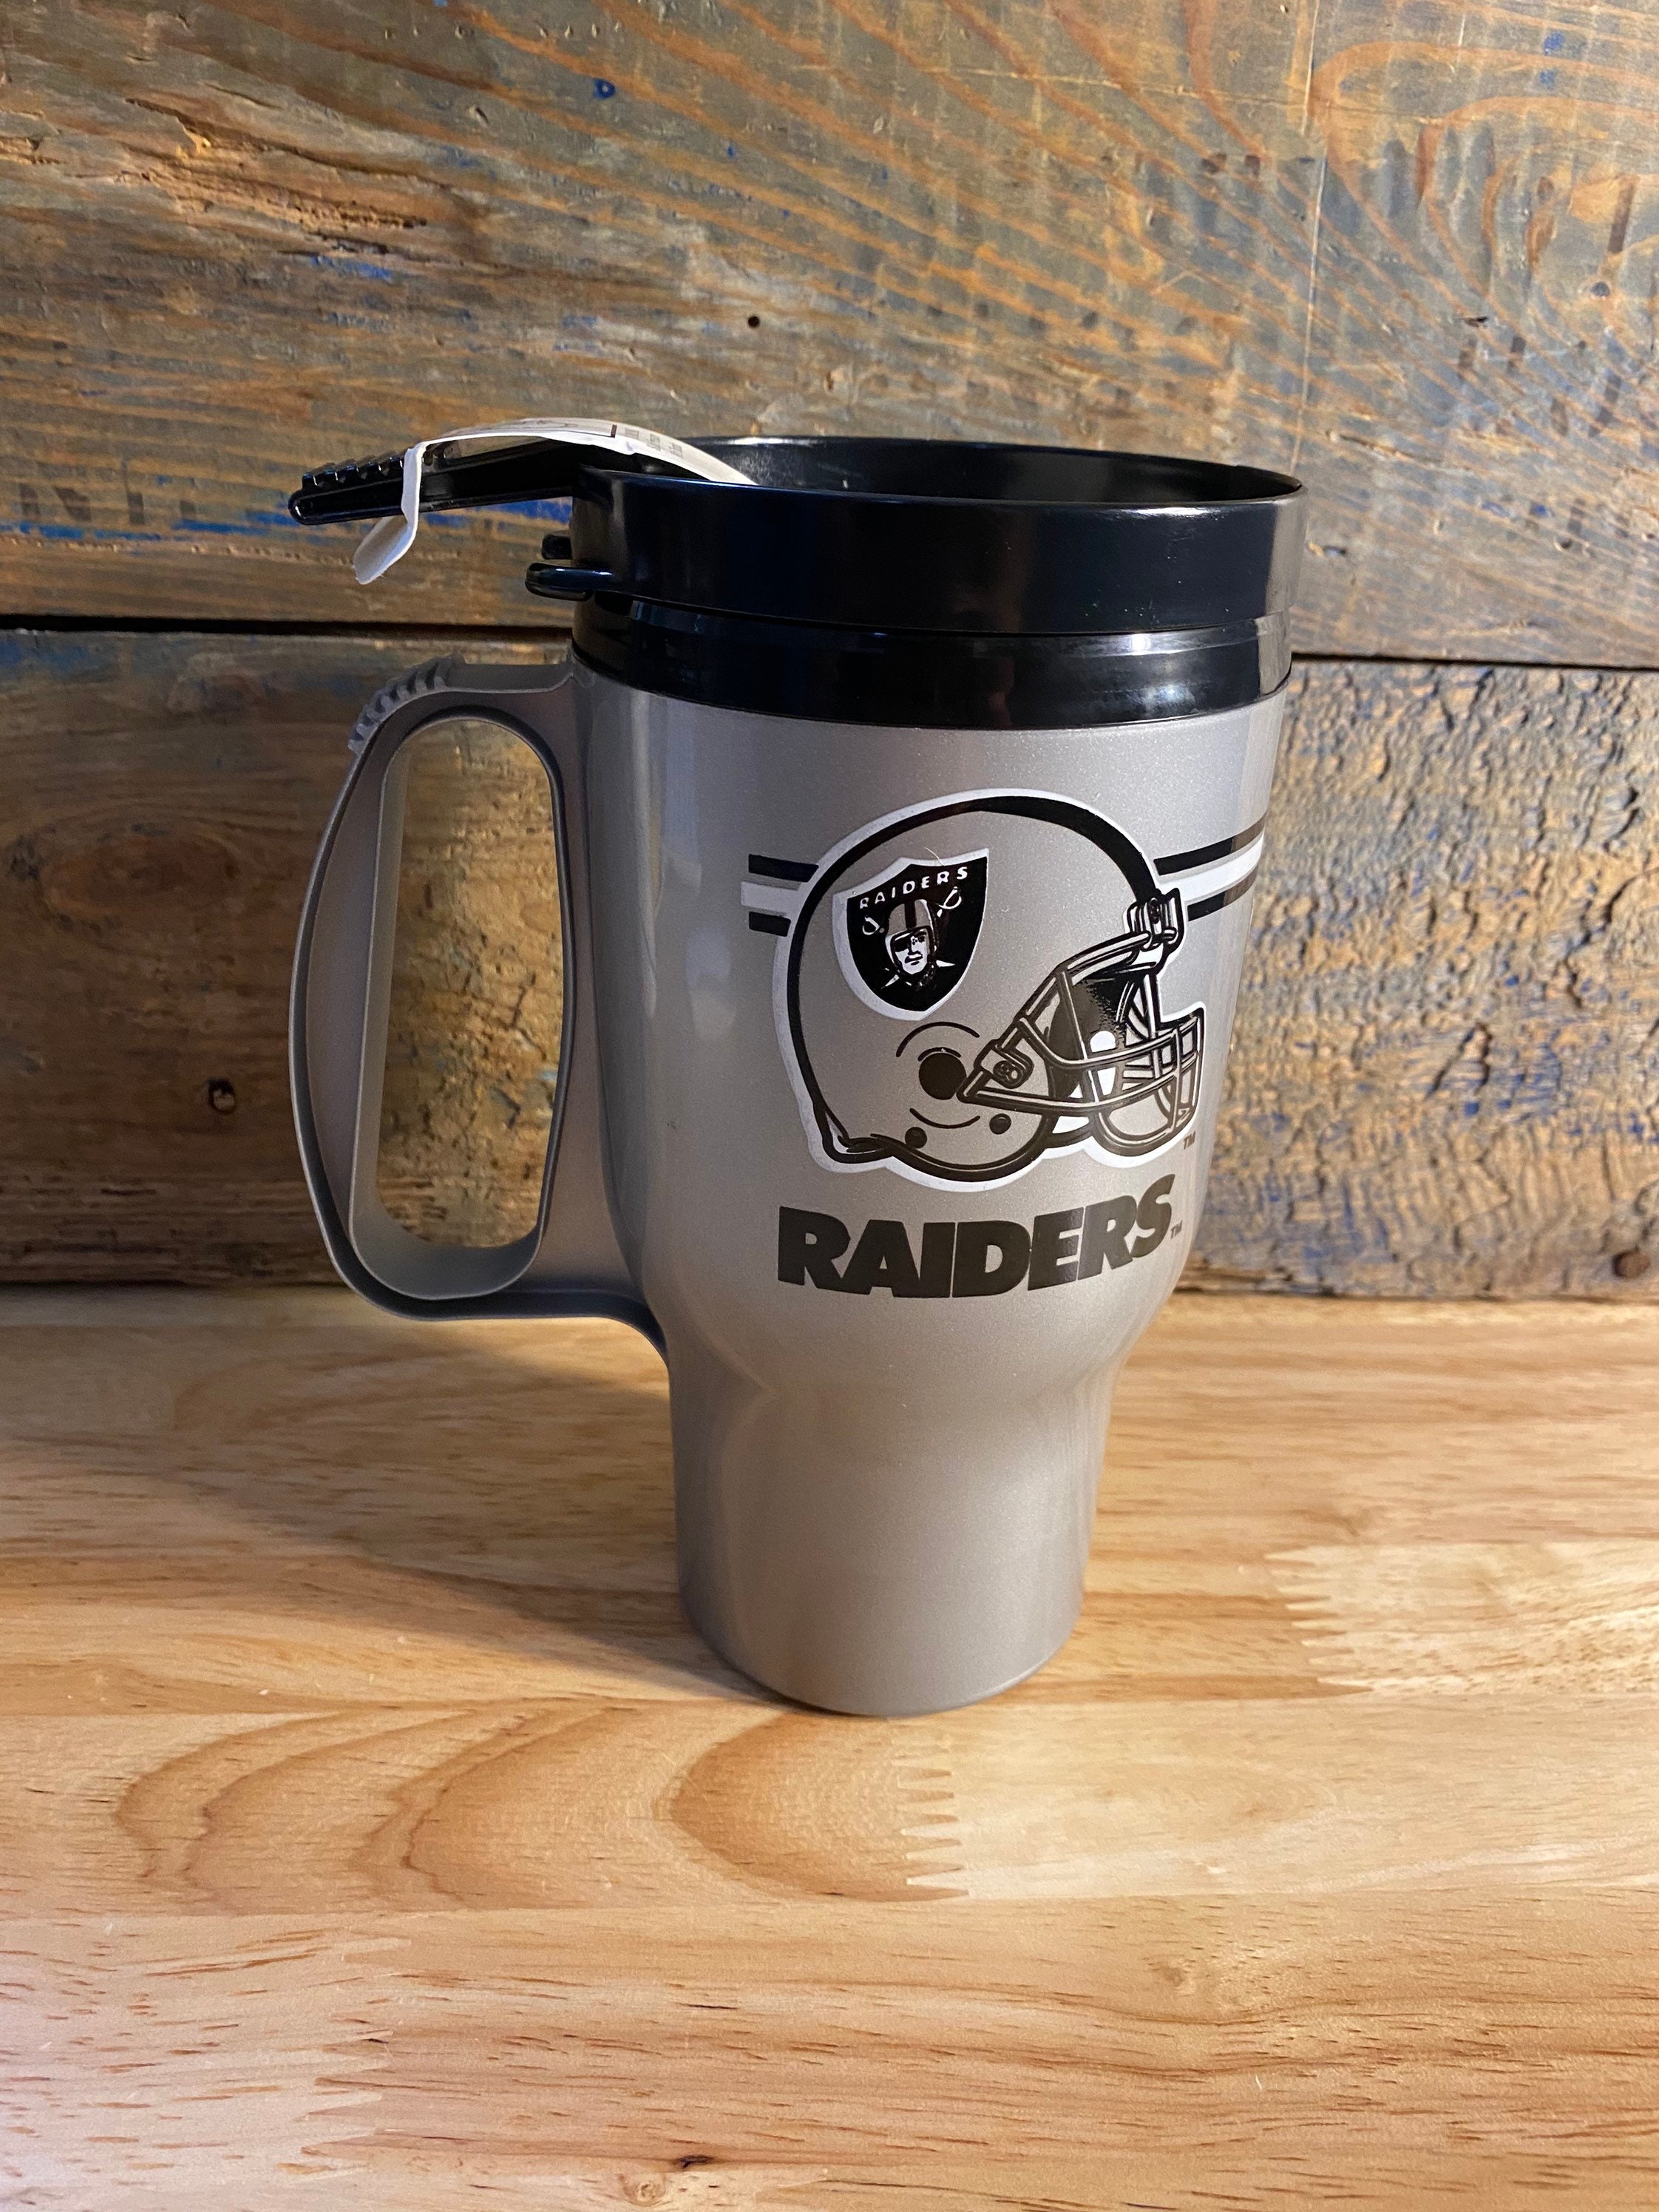 LV RAIDERS Ceramic Coffee Mug - household items - by owner - housewares  sale - craigslist